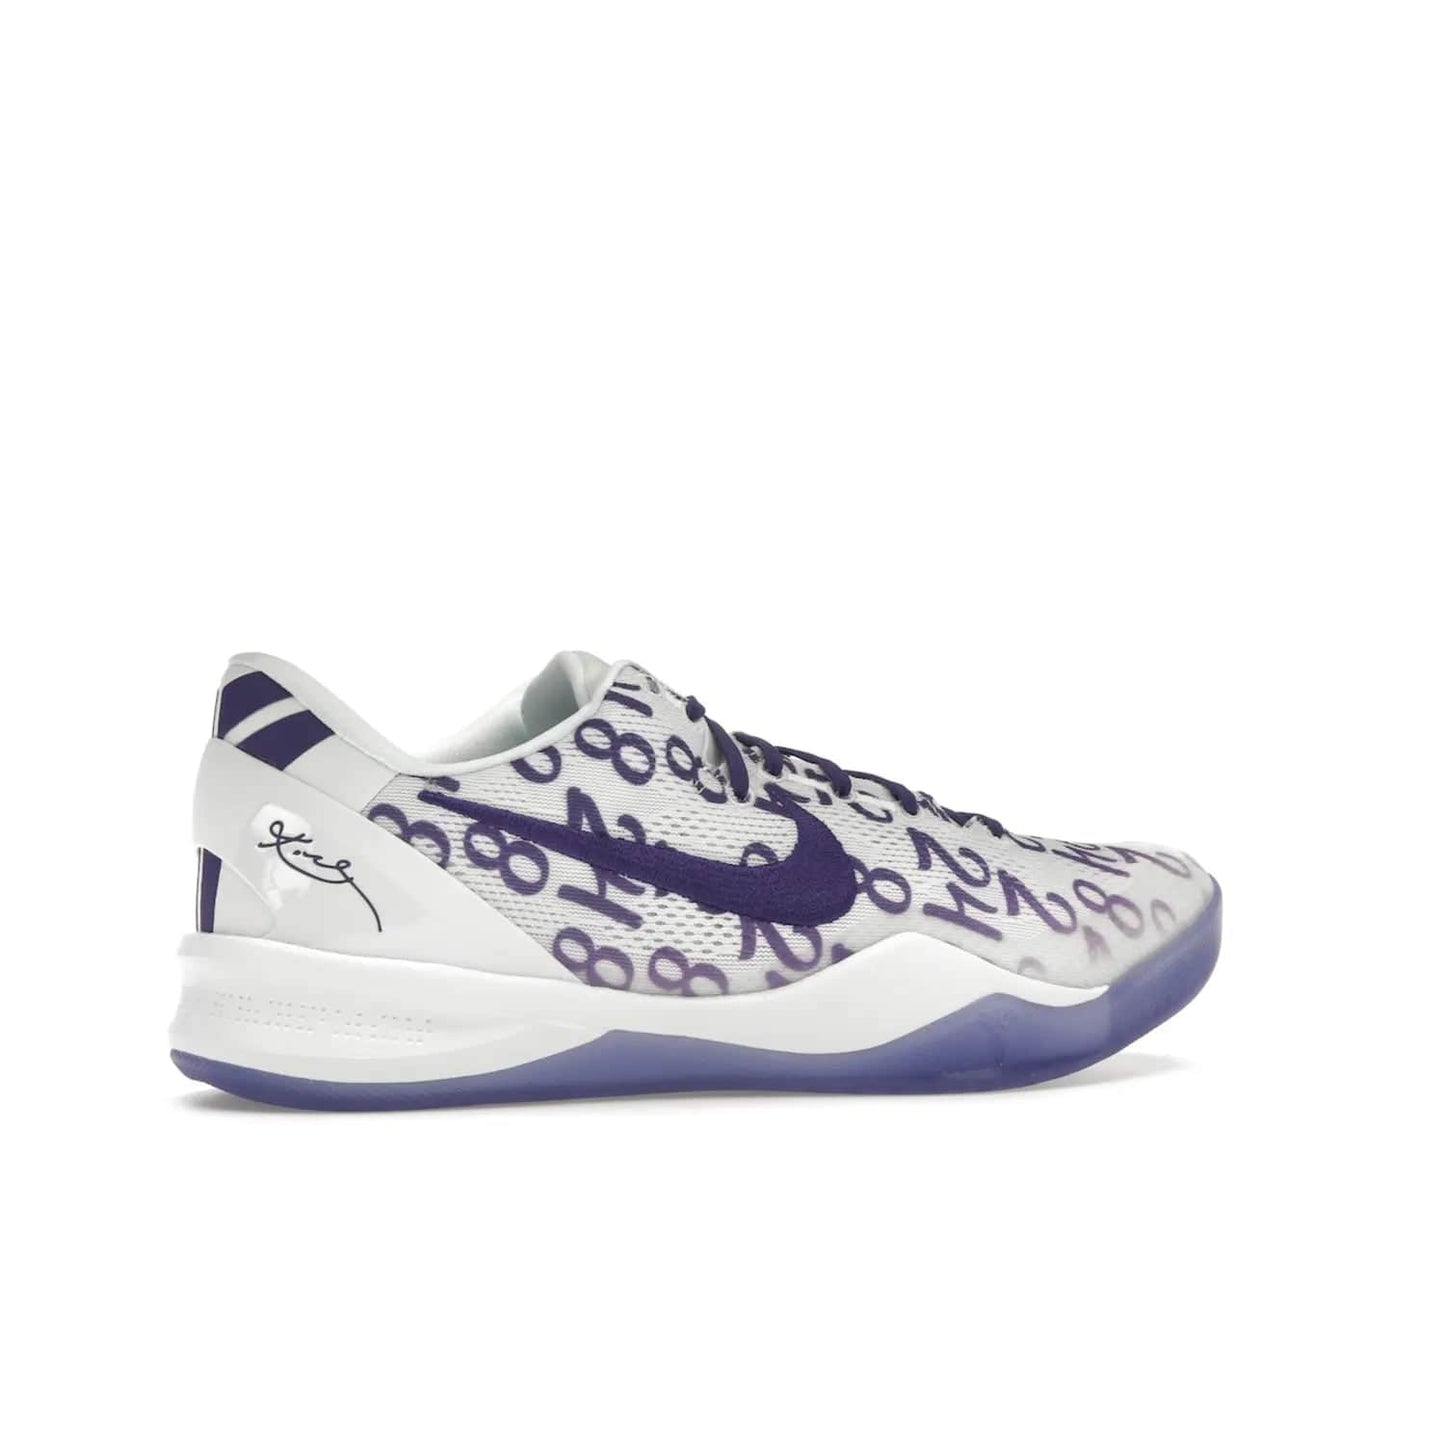 Nike Kobe 8 Protro Court Purple - Image 35 - Only at www.BallersClubKickz.com - 